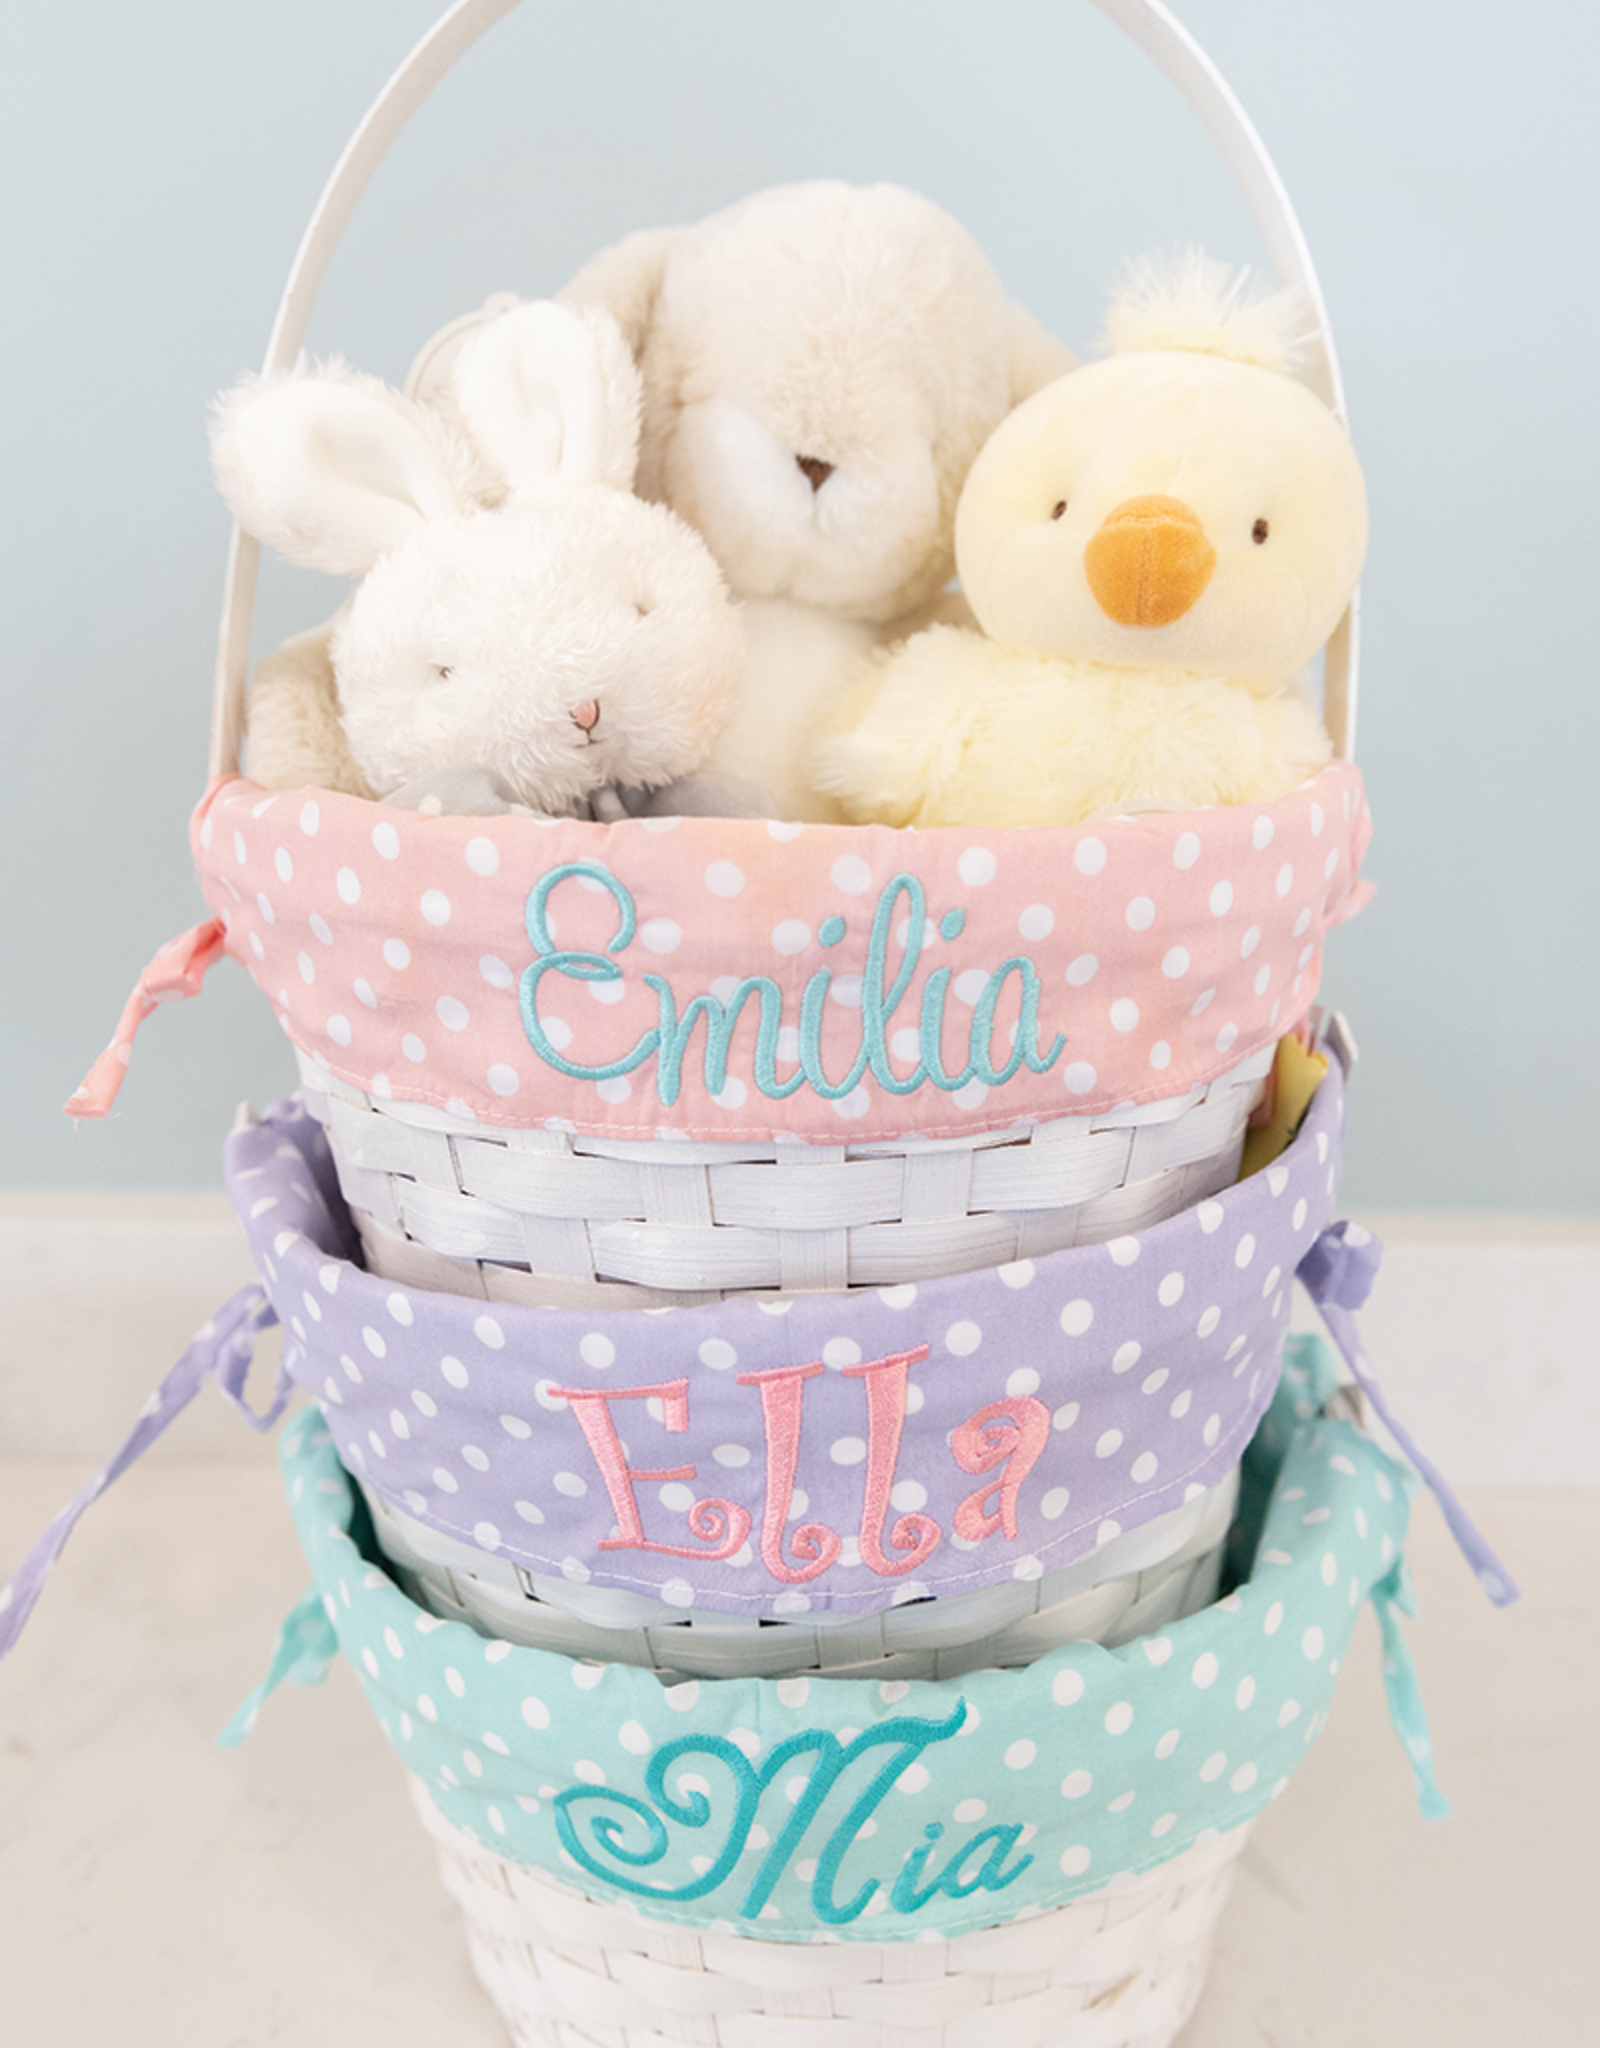 Burton & Burton Lined Easter Basket w/ Embroidery Pink Dot